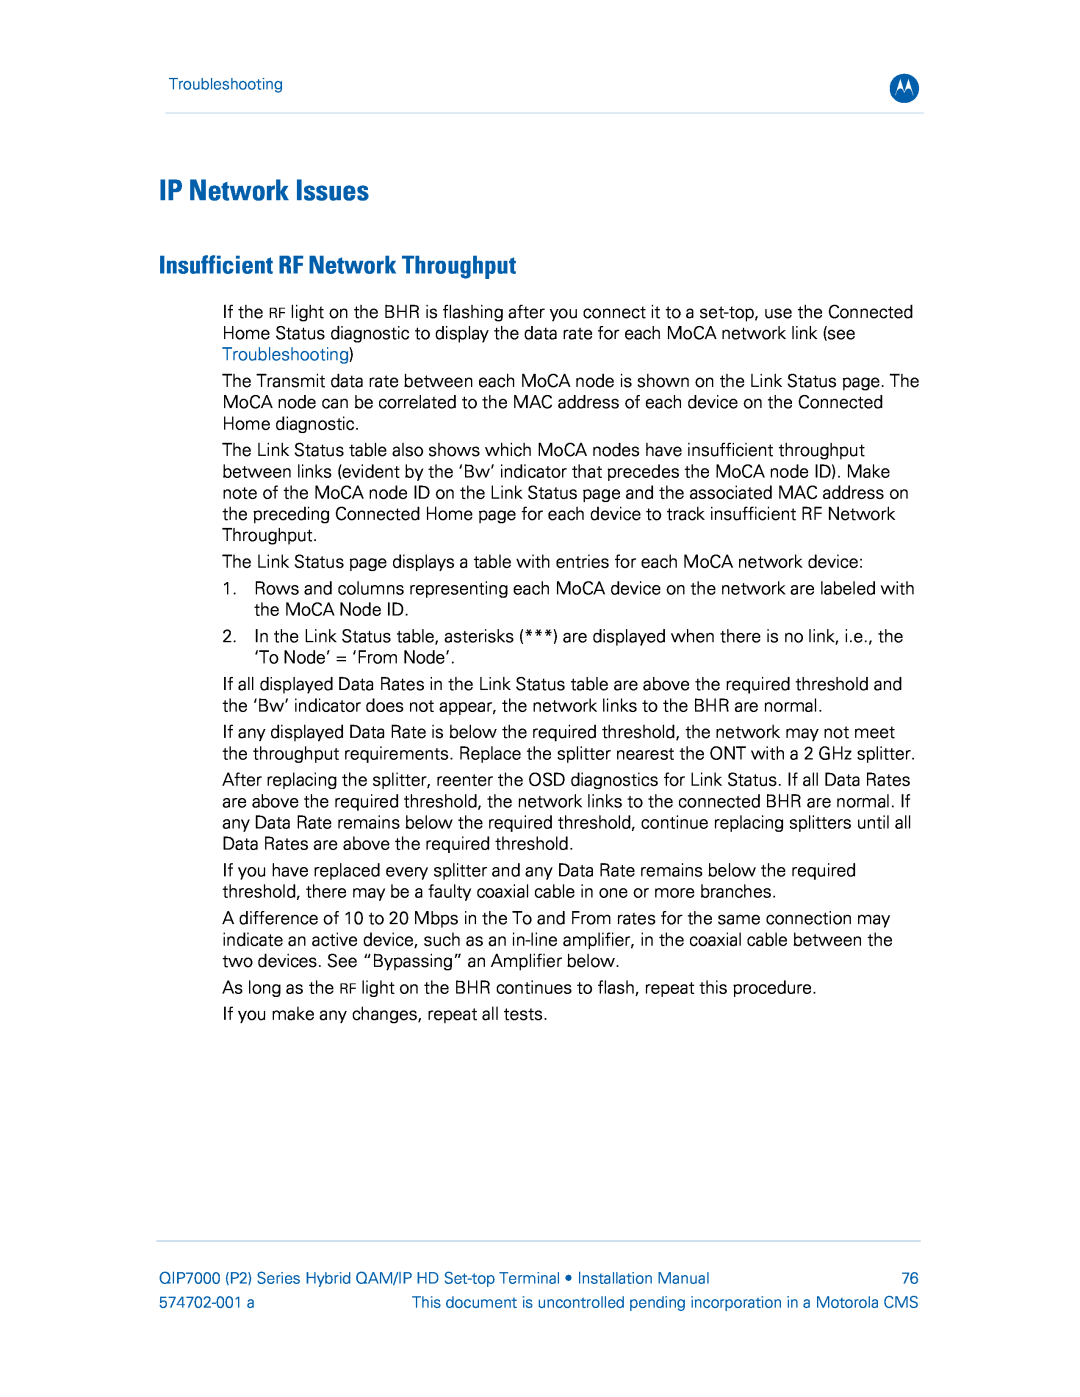 Motorola QIP7000 installation manual IP Network Issues, Insufficient RF Network Throughput 